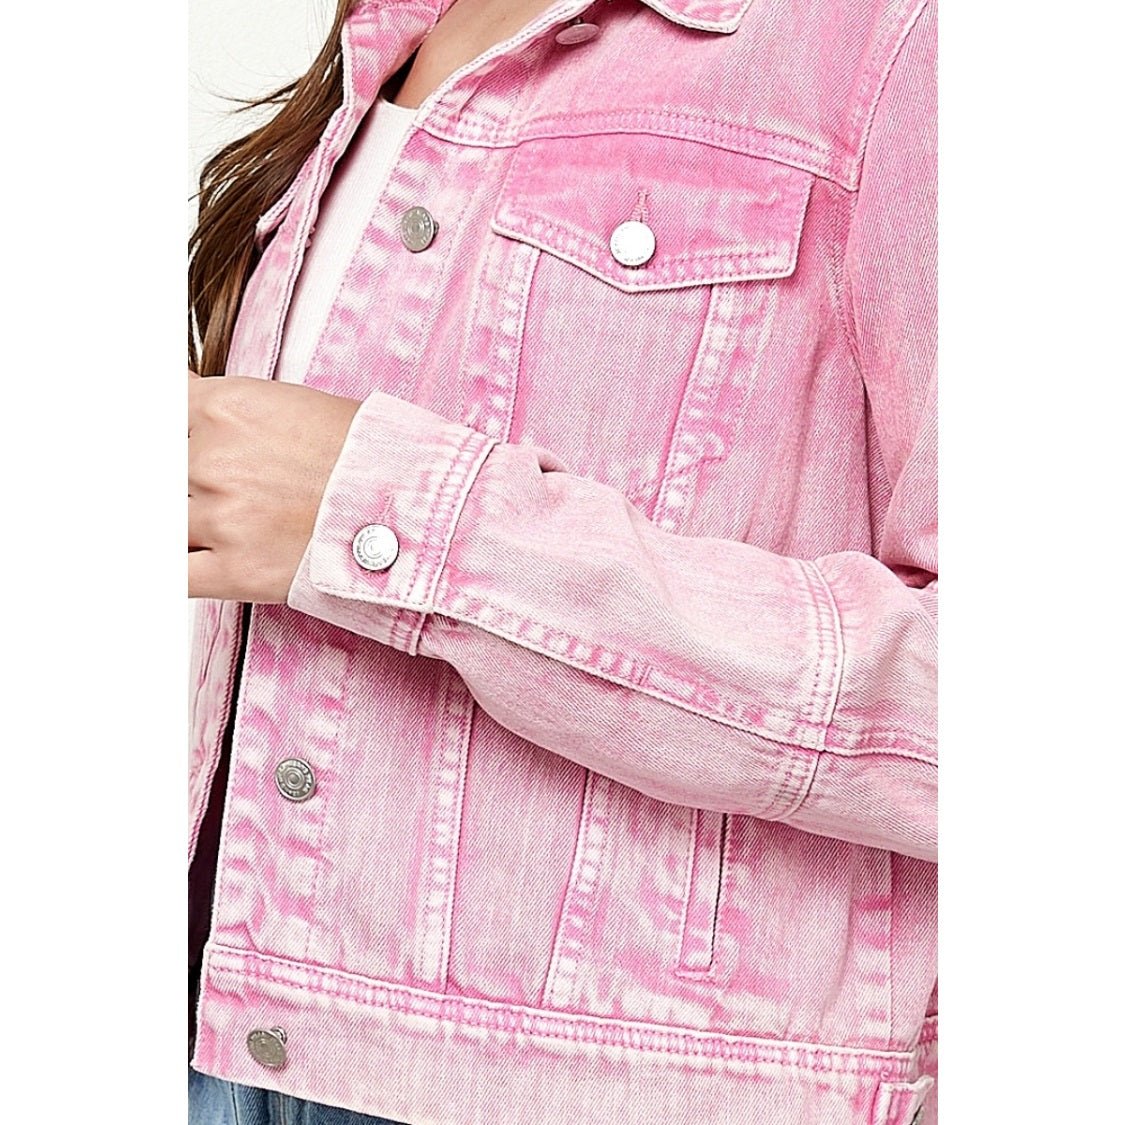 Pink Cropped Denim JacketVeveretJean Jacket